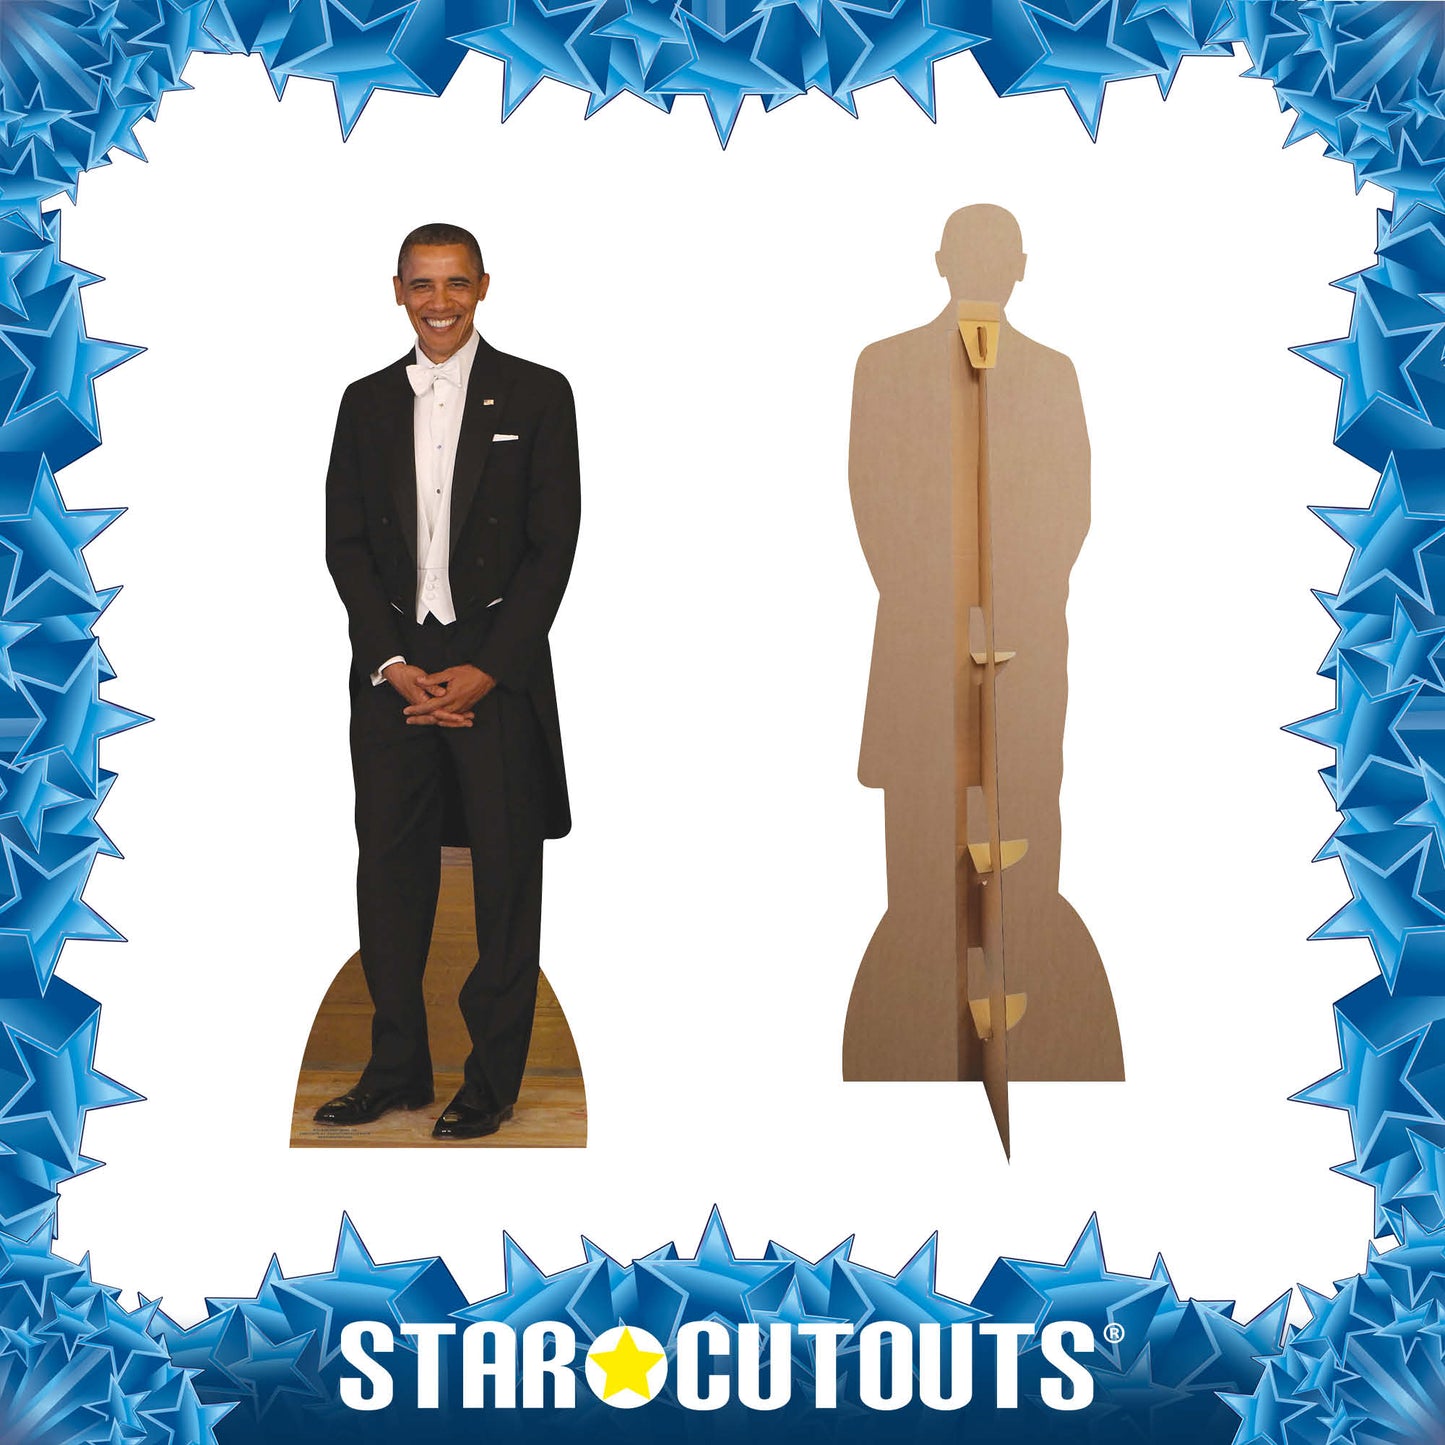 President Barack Obama Cardboard Cutout Politician